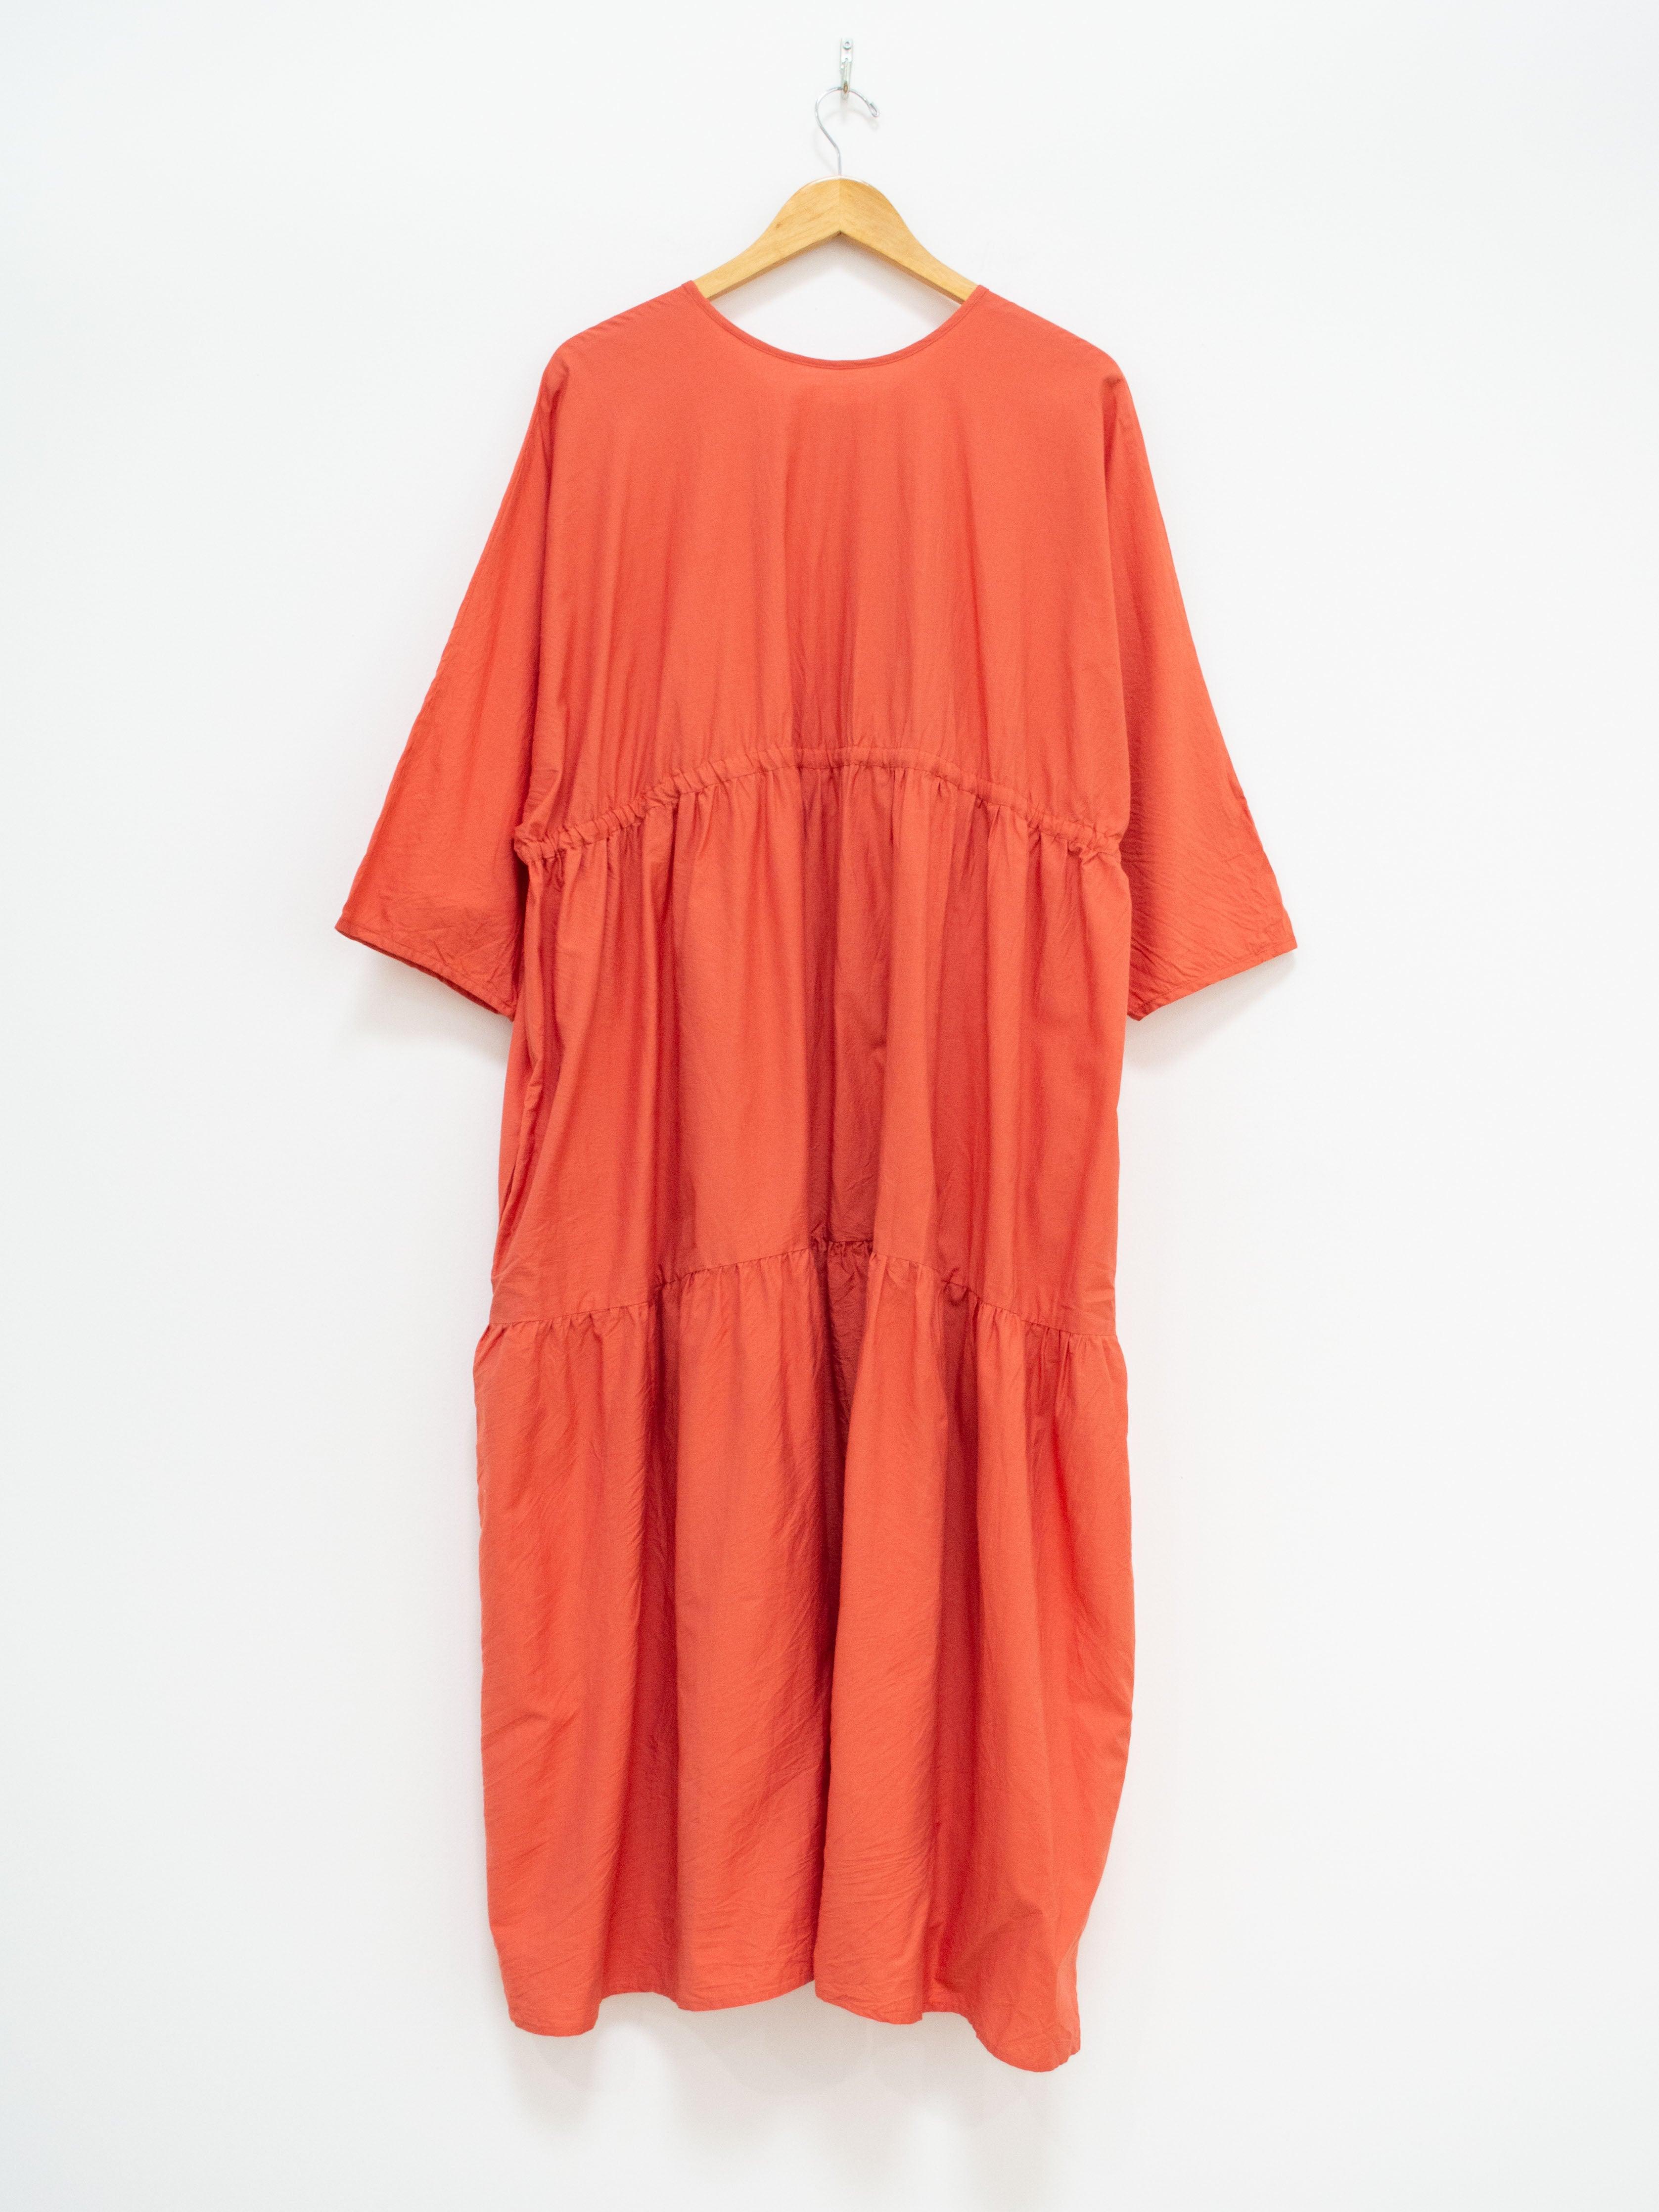 Namu Shop - Veritecoeur Co / Silk Two Way Dress - Orange Red